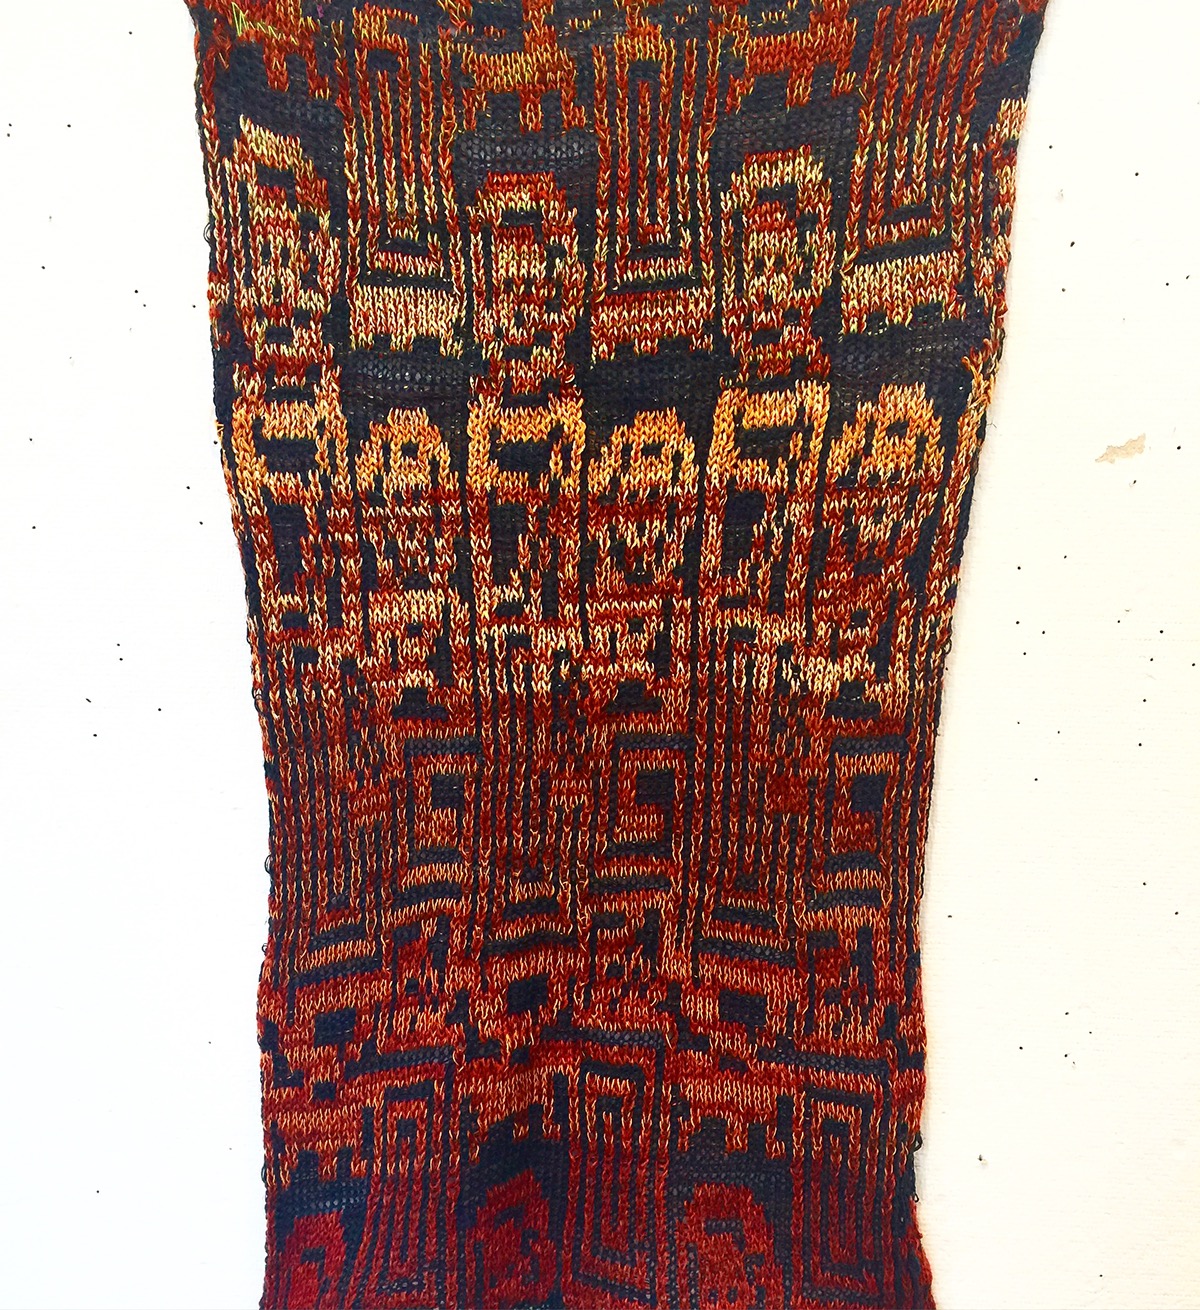 Textiles machineknitting knitting fabric yarn pattern surfacedesign